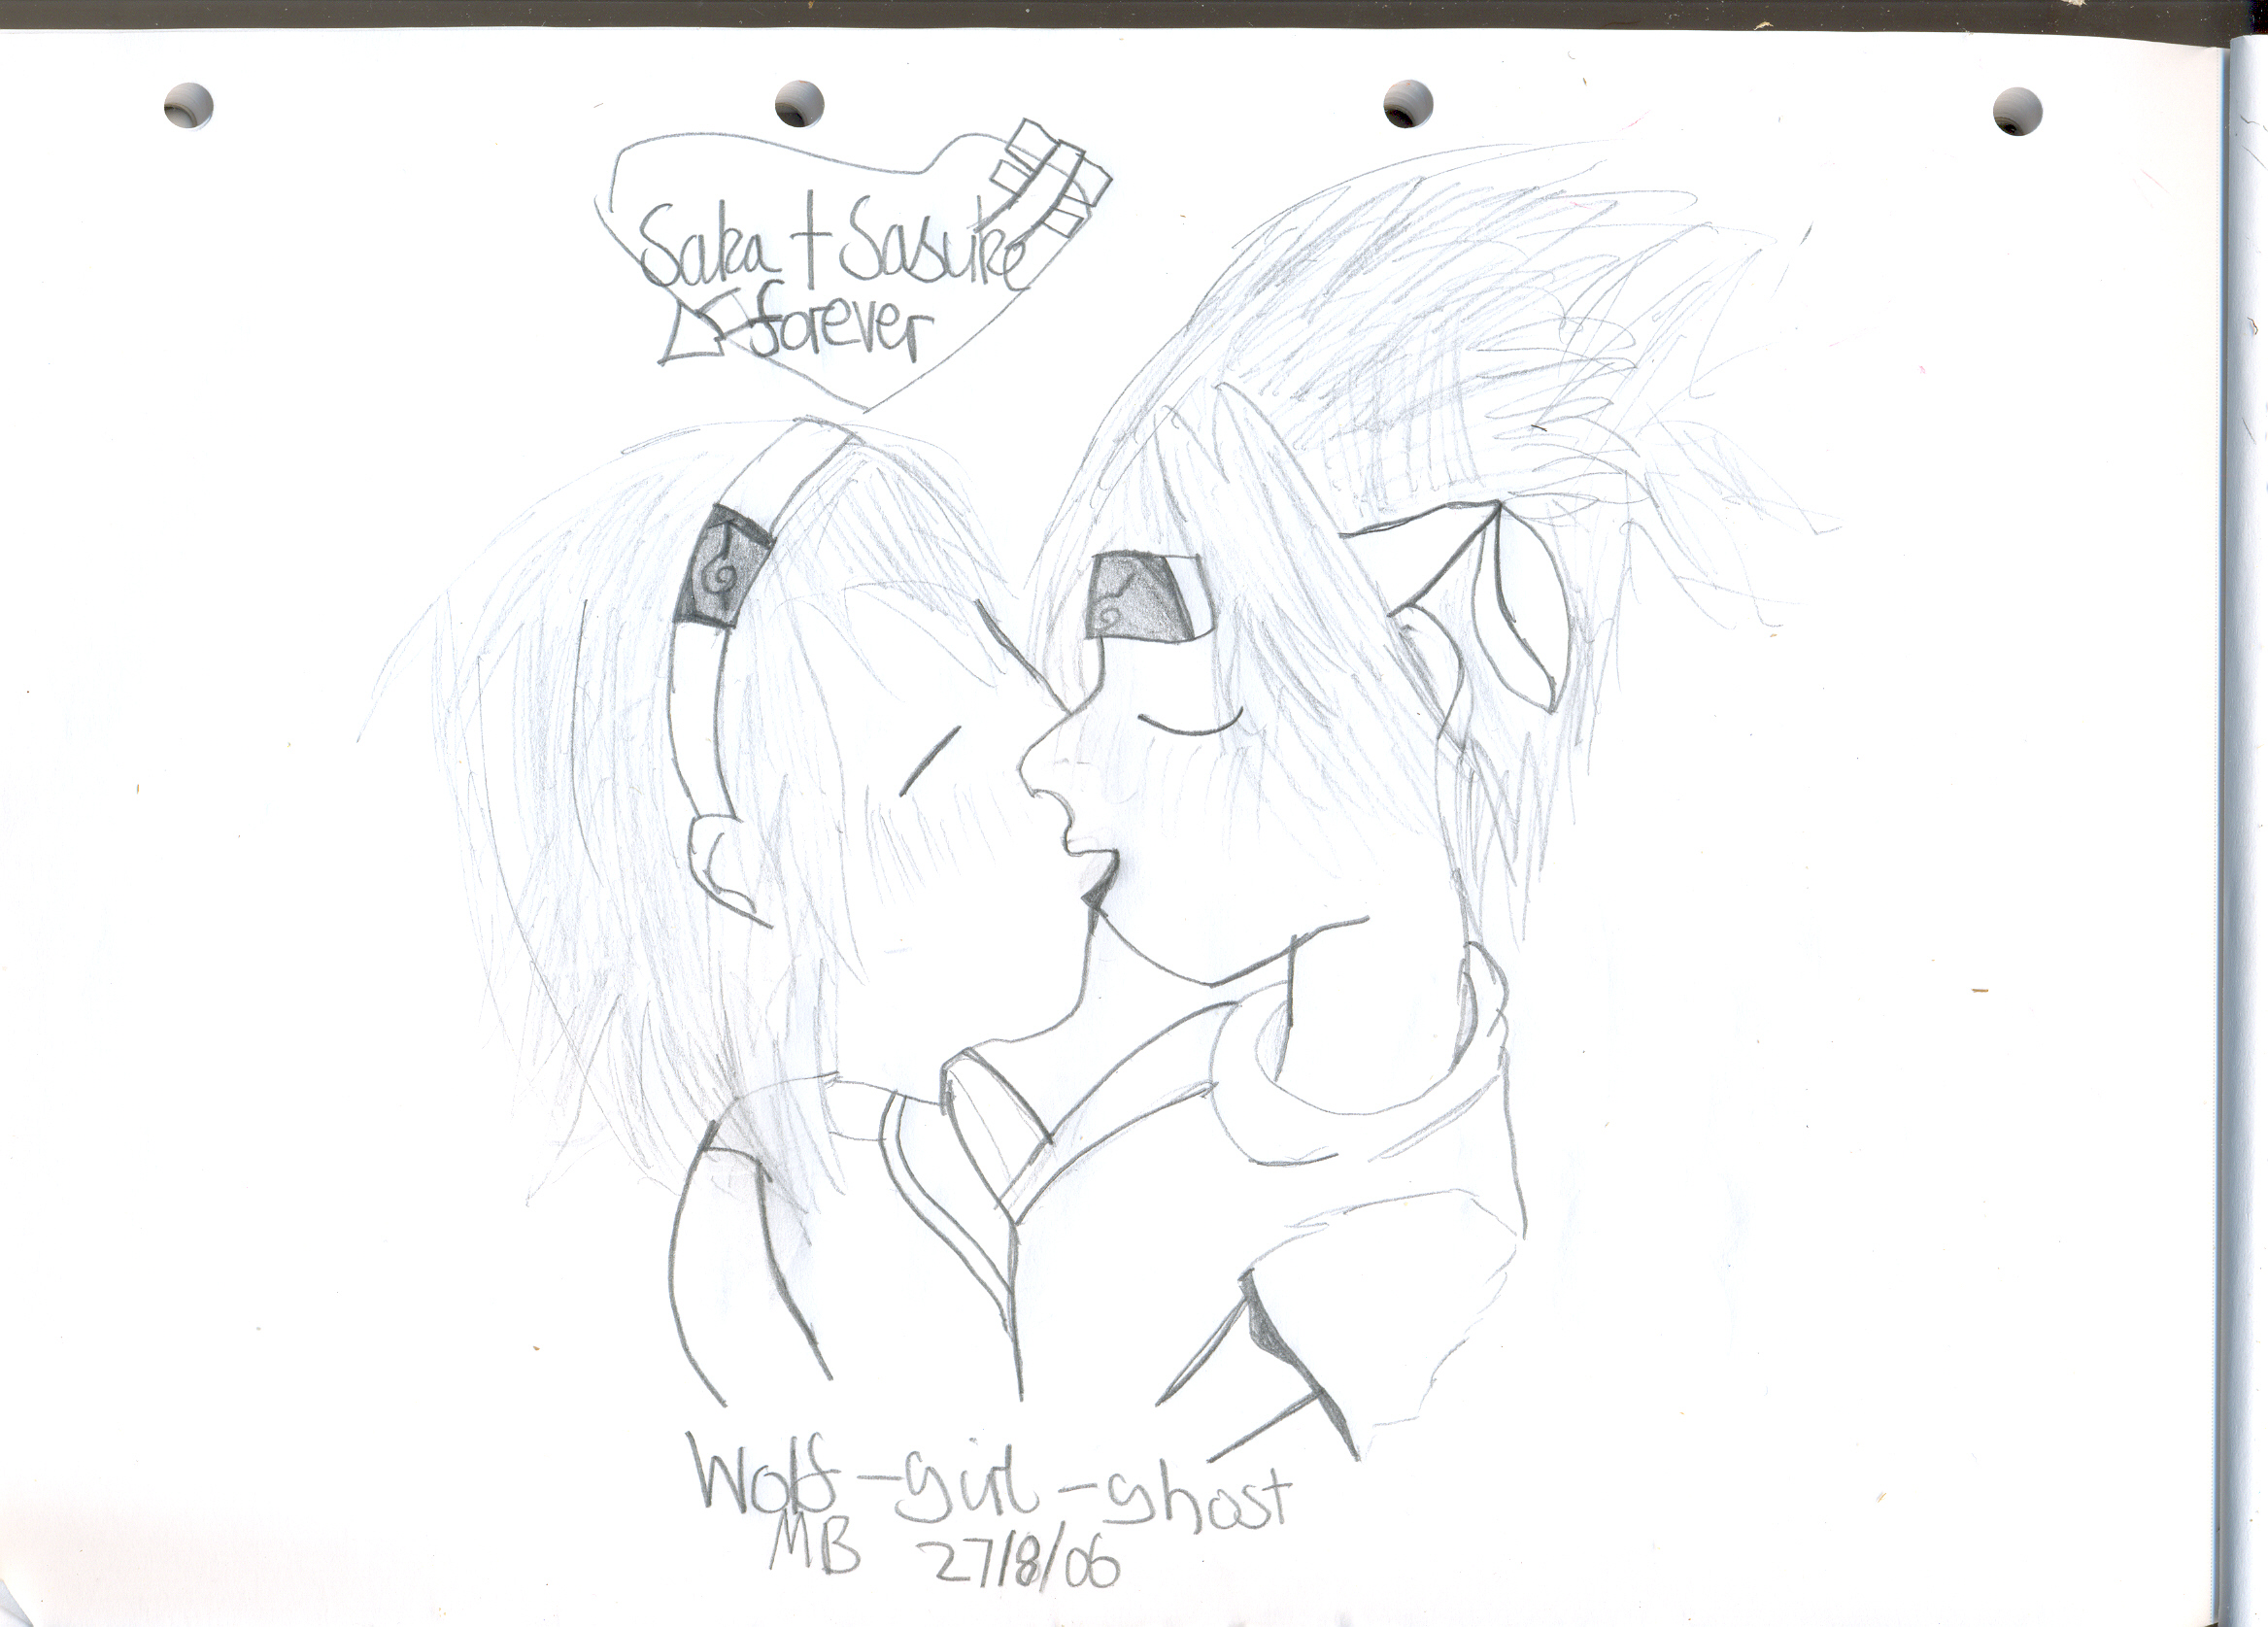 saka and sasuke kissing(RQ for sasukeishot) by wolf-girl-ghost